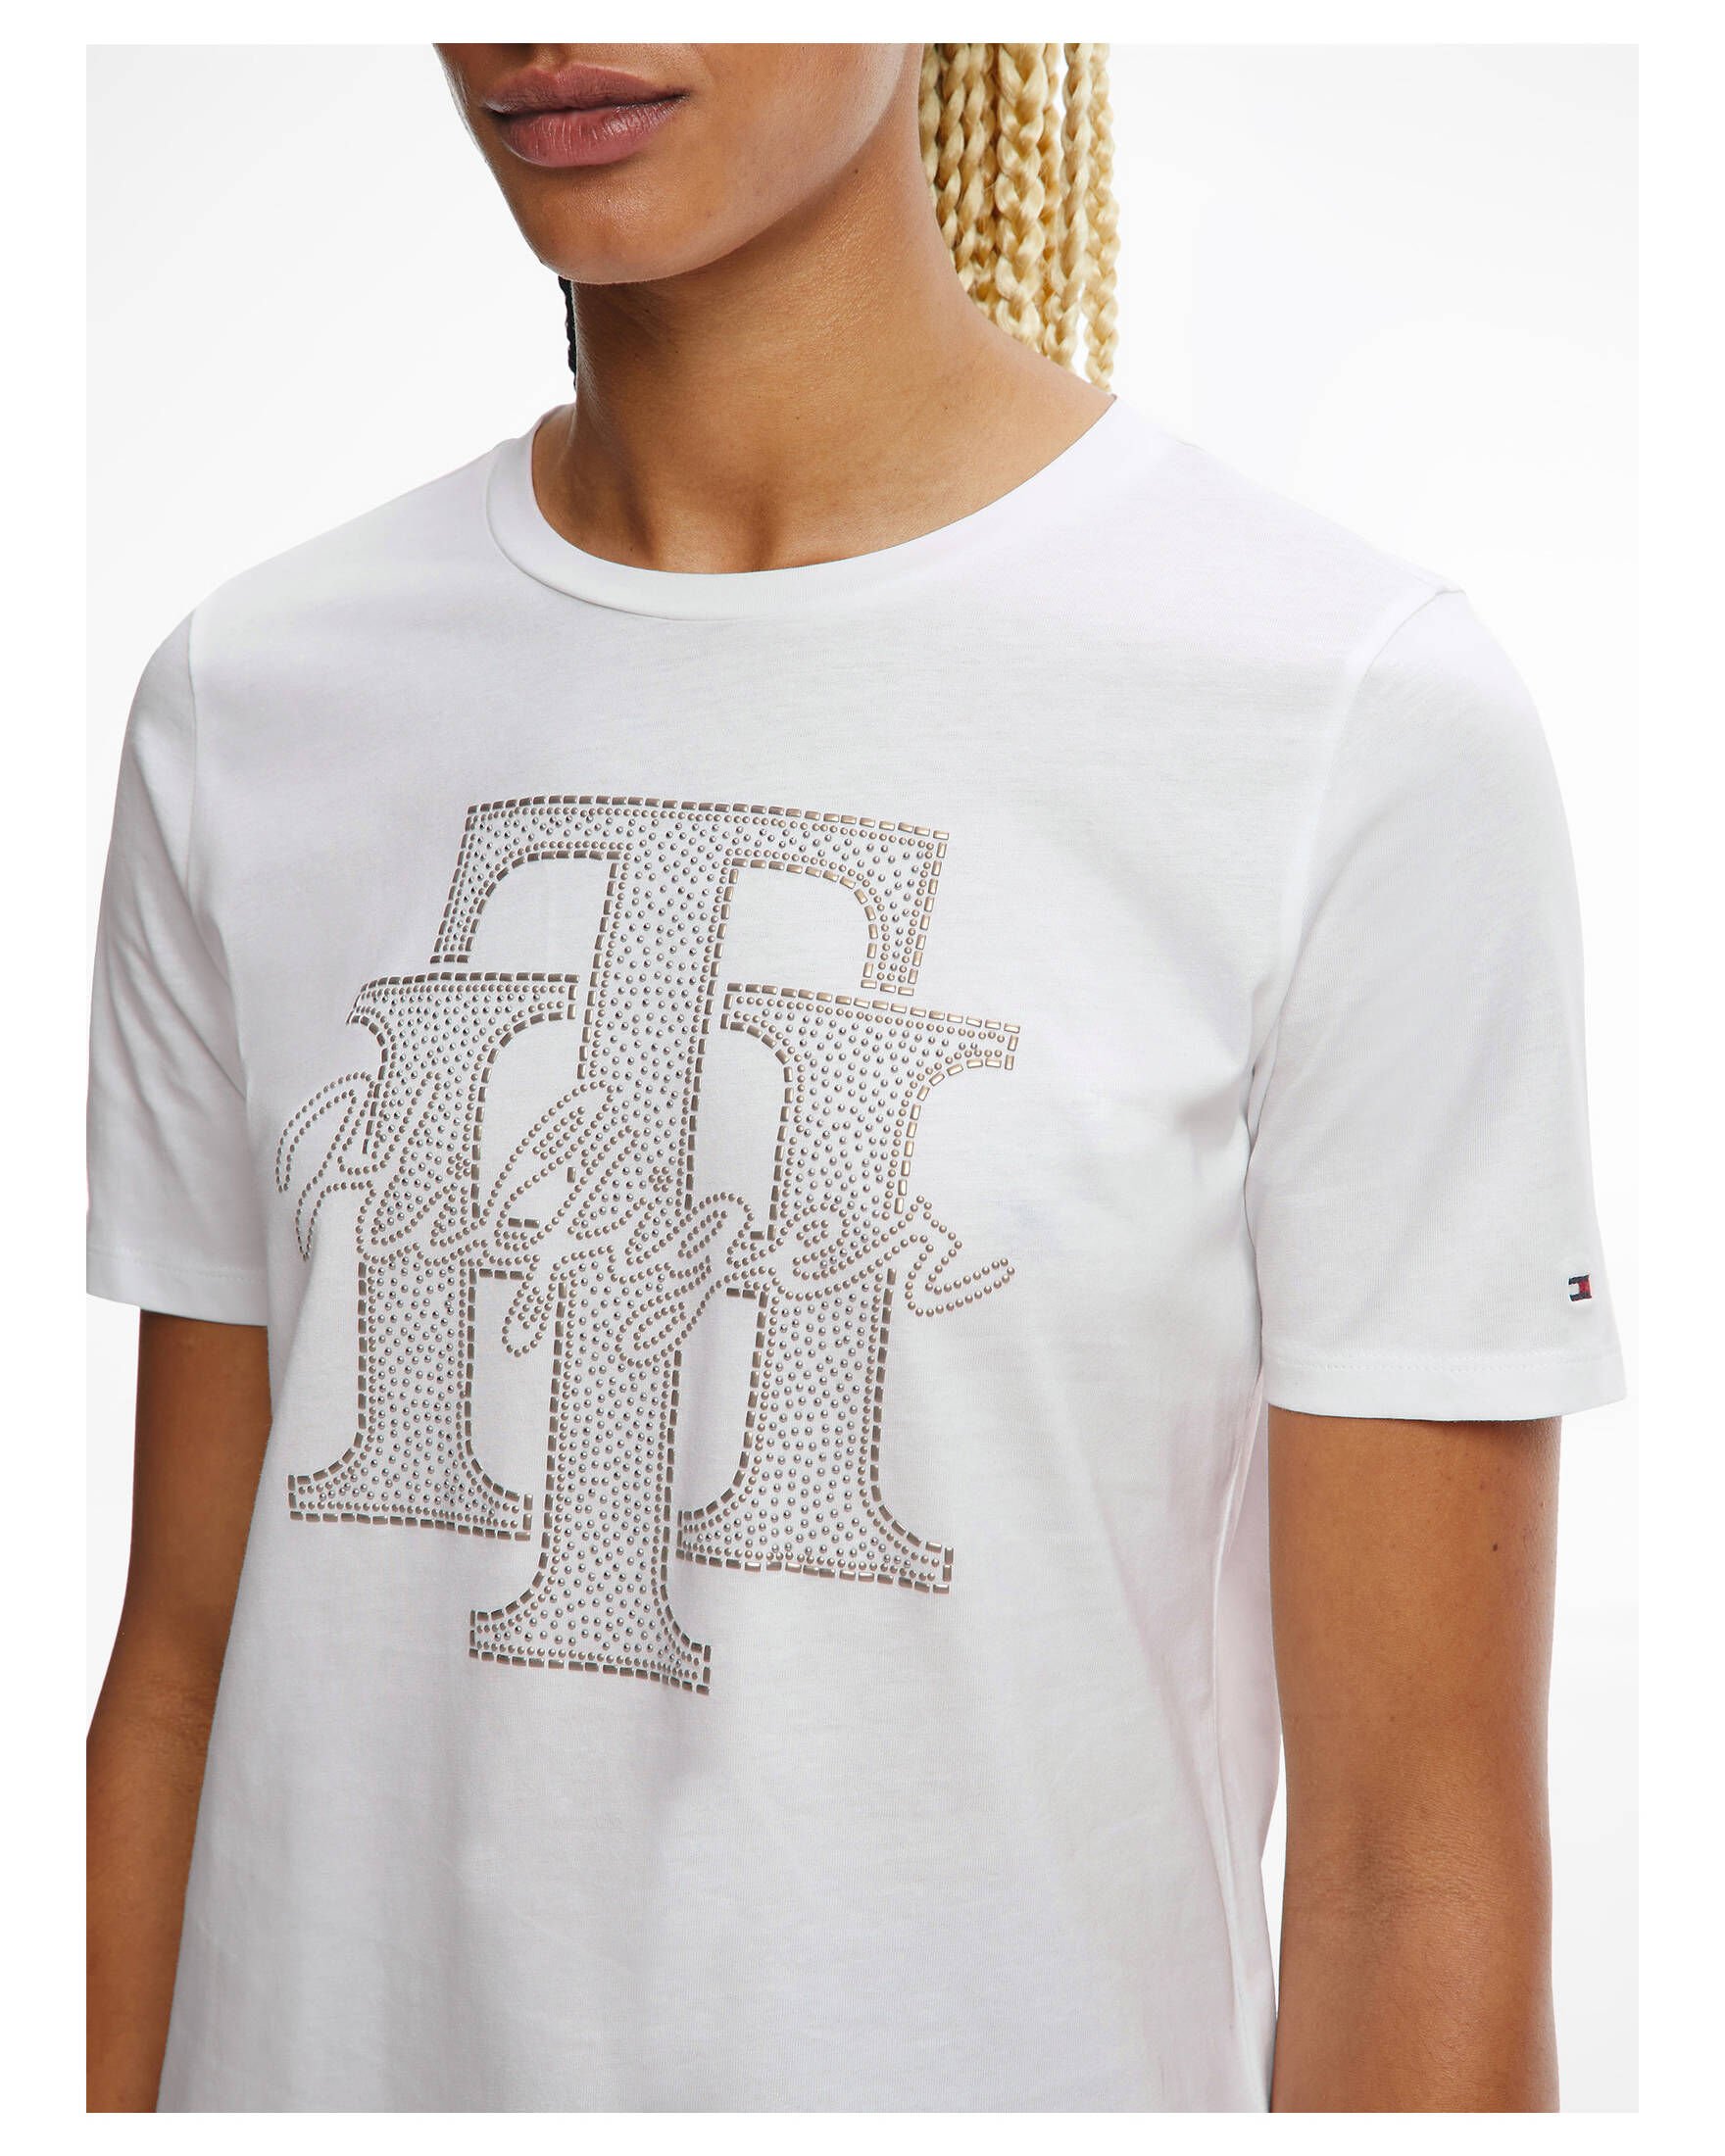 omhyggelig chance bekymring Tommy Hilfiger Damen T-Shirt REGULAR TH CHRYSTAL kaufen | engelhorn